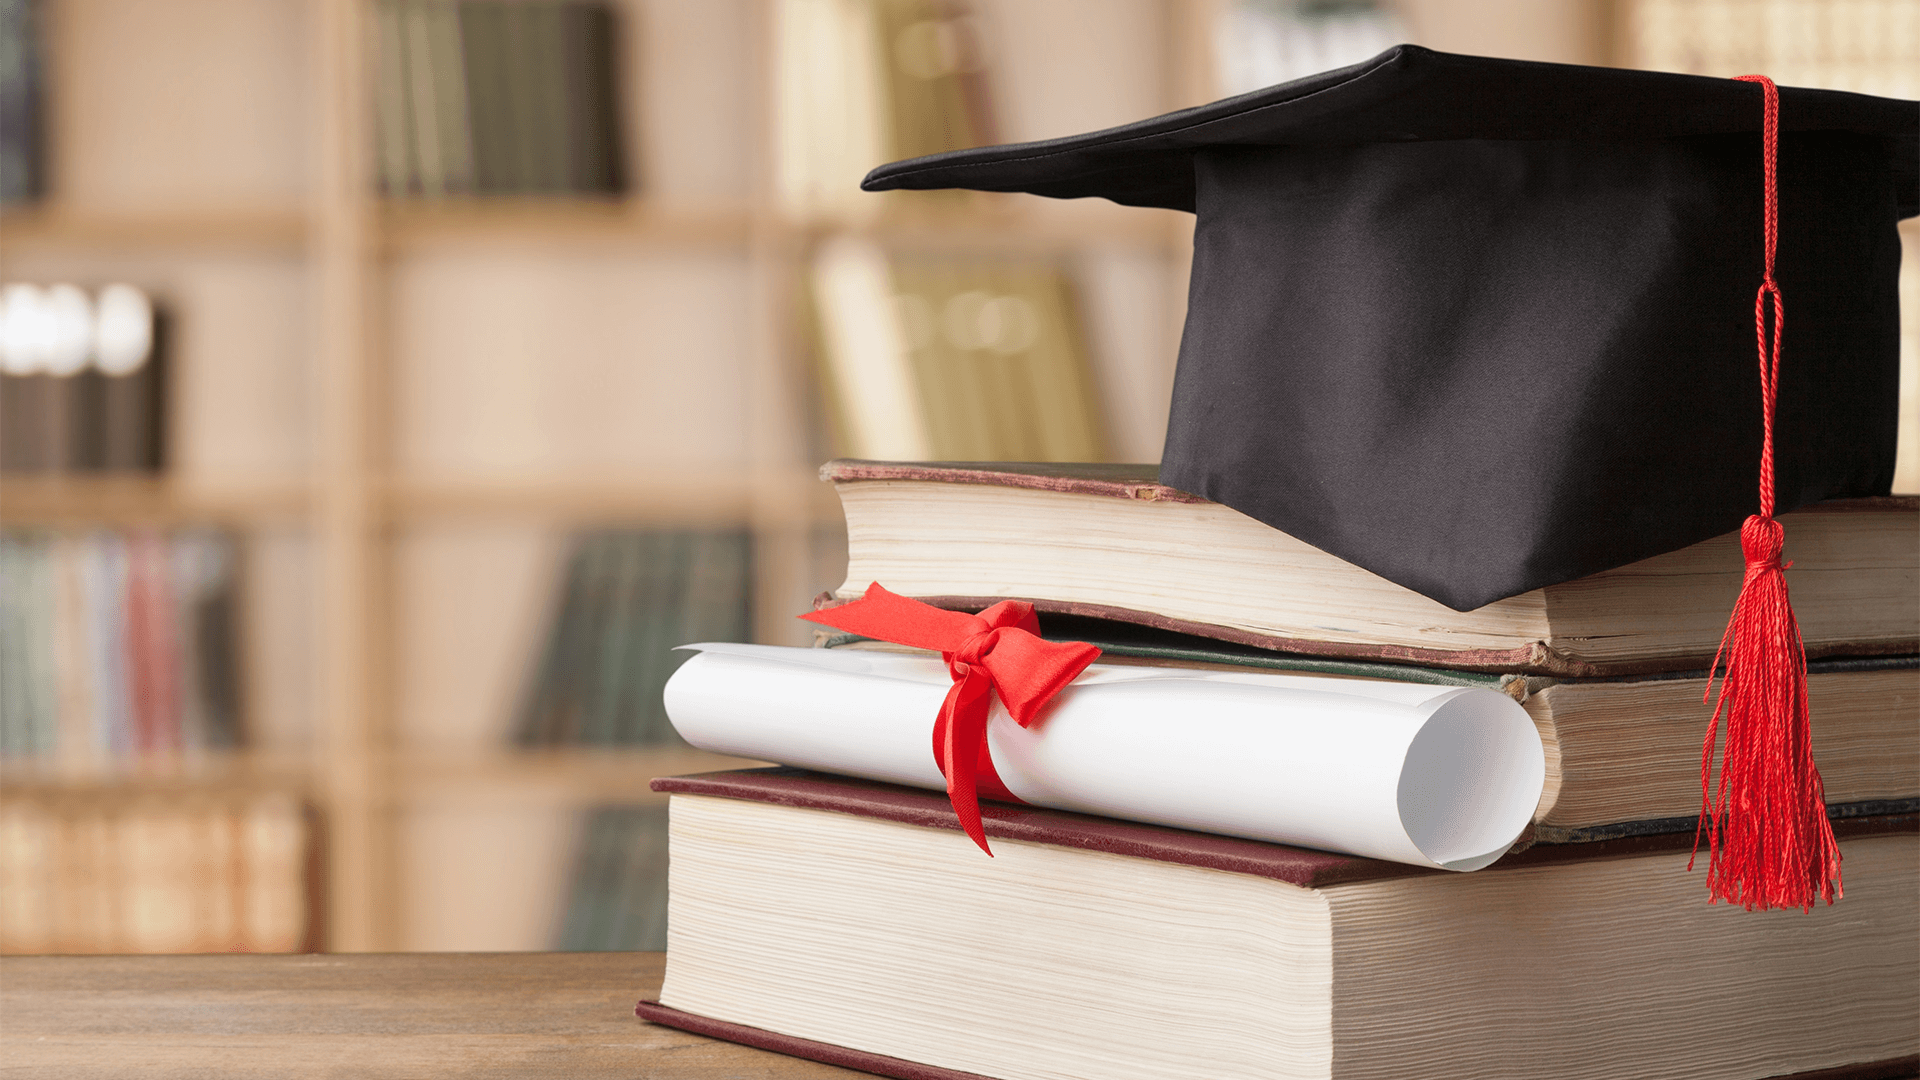 Books, degree scroll diploma and graduation cap